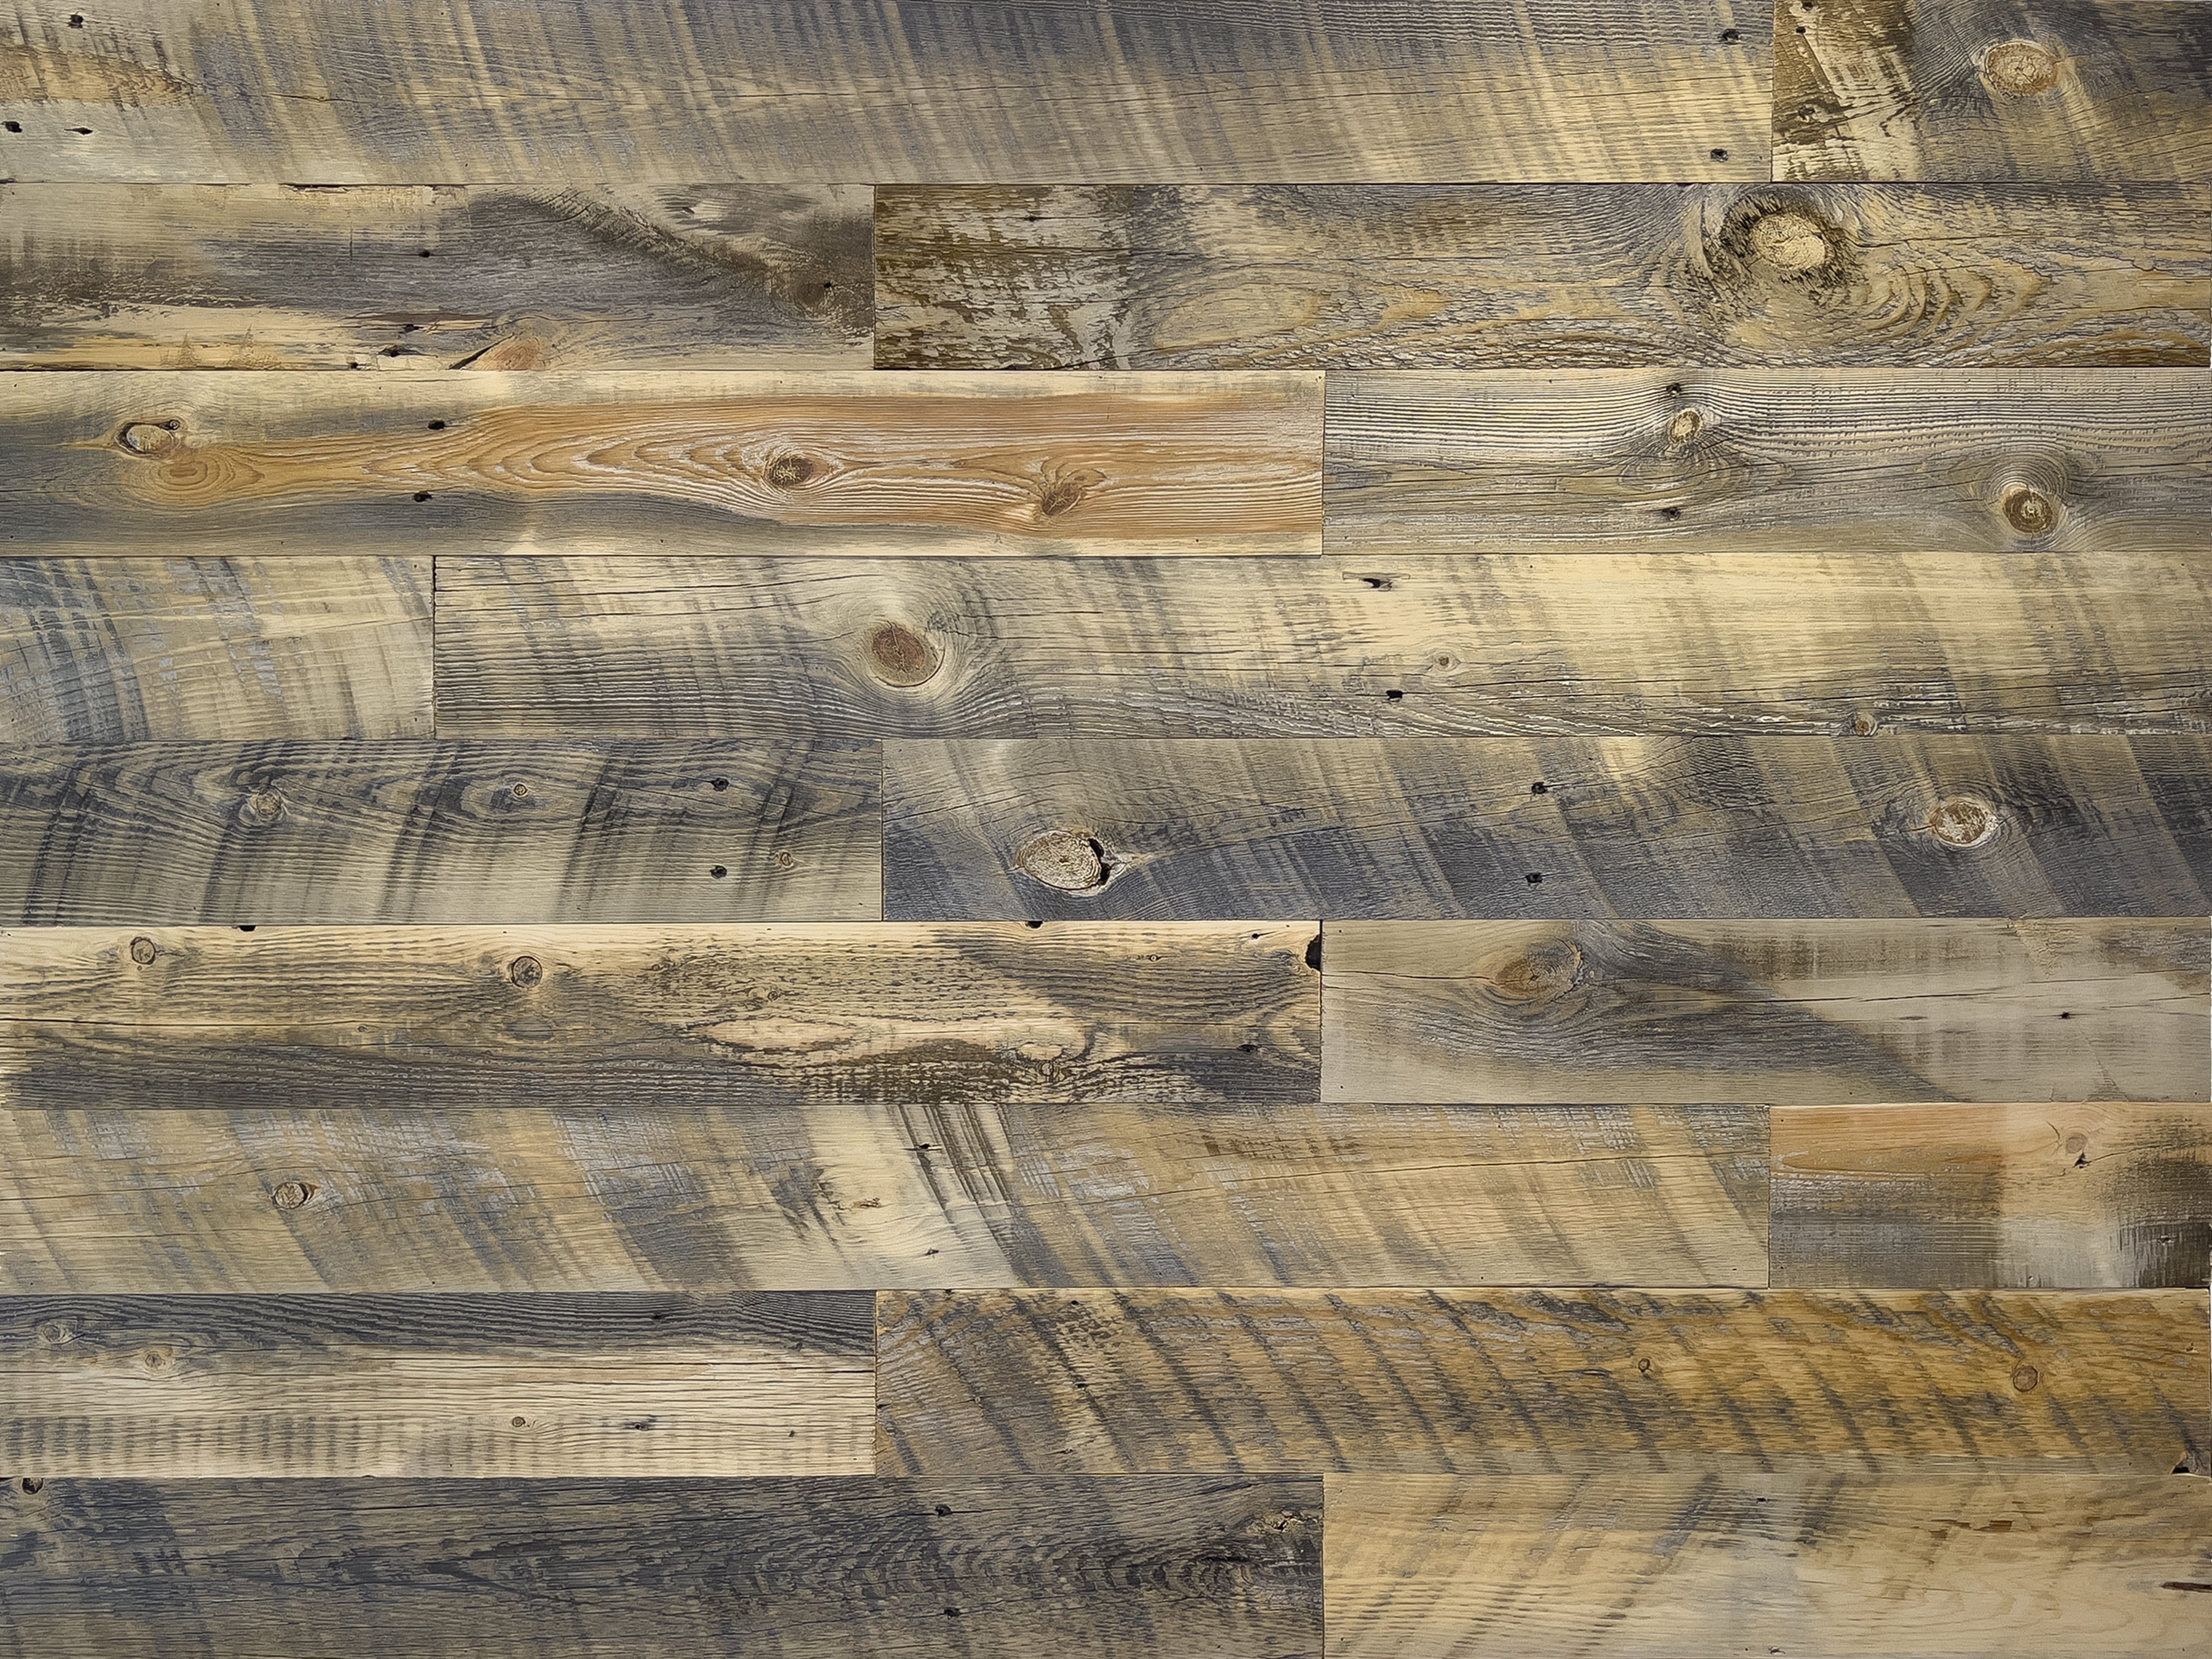 Wheatland High-Contrast Brown & Grey Reclaimed Wood Planks